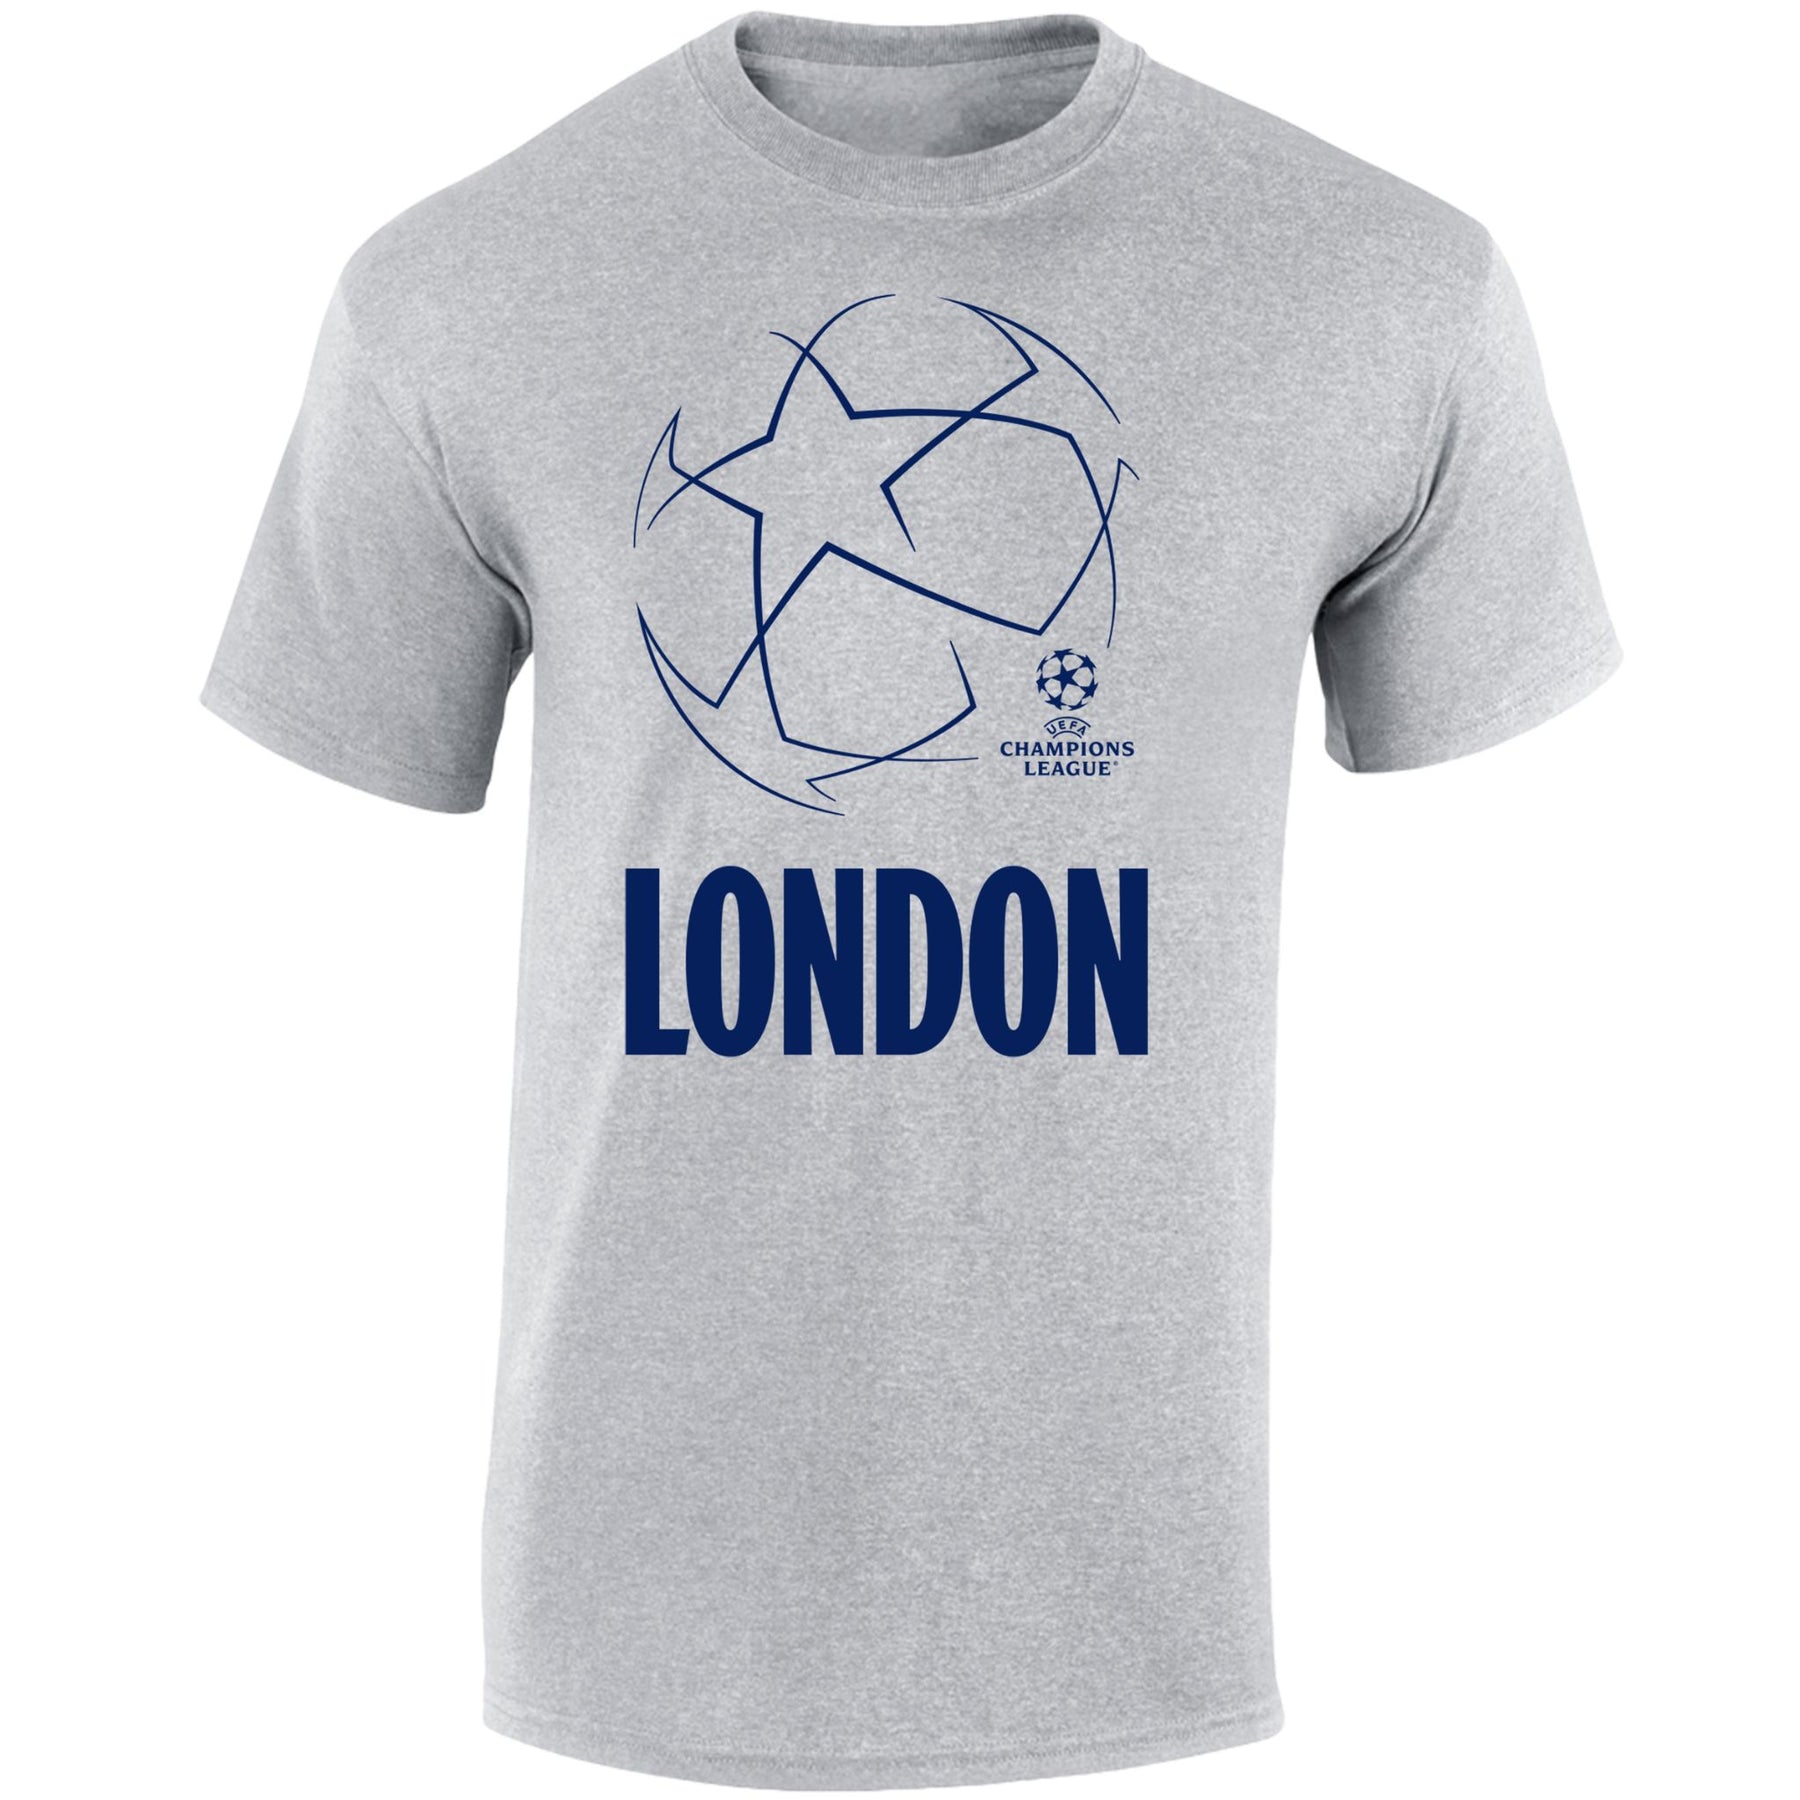 Champions League Starball London City T-Shirt Grey